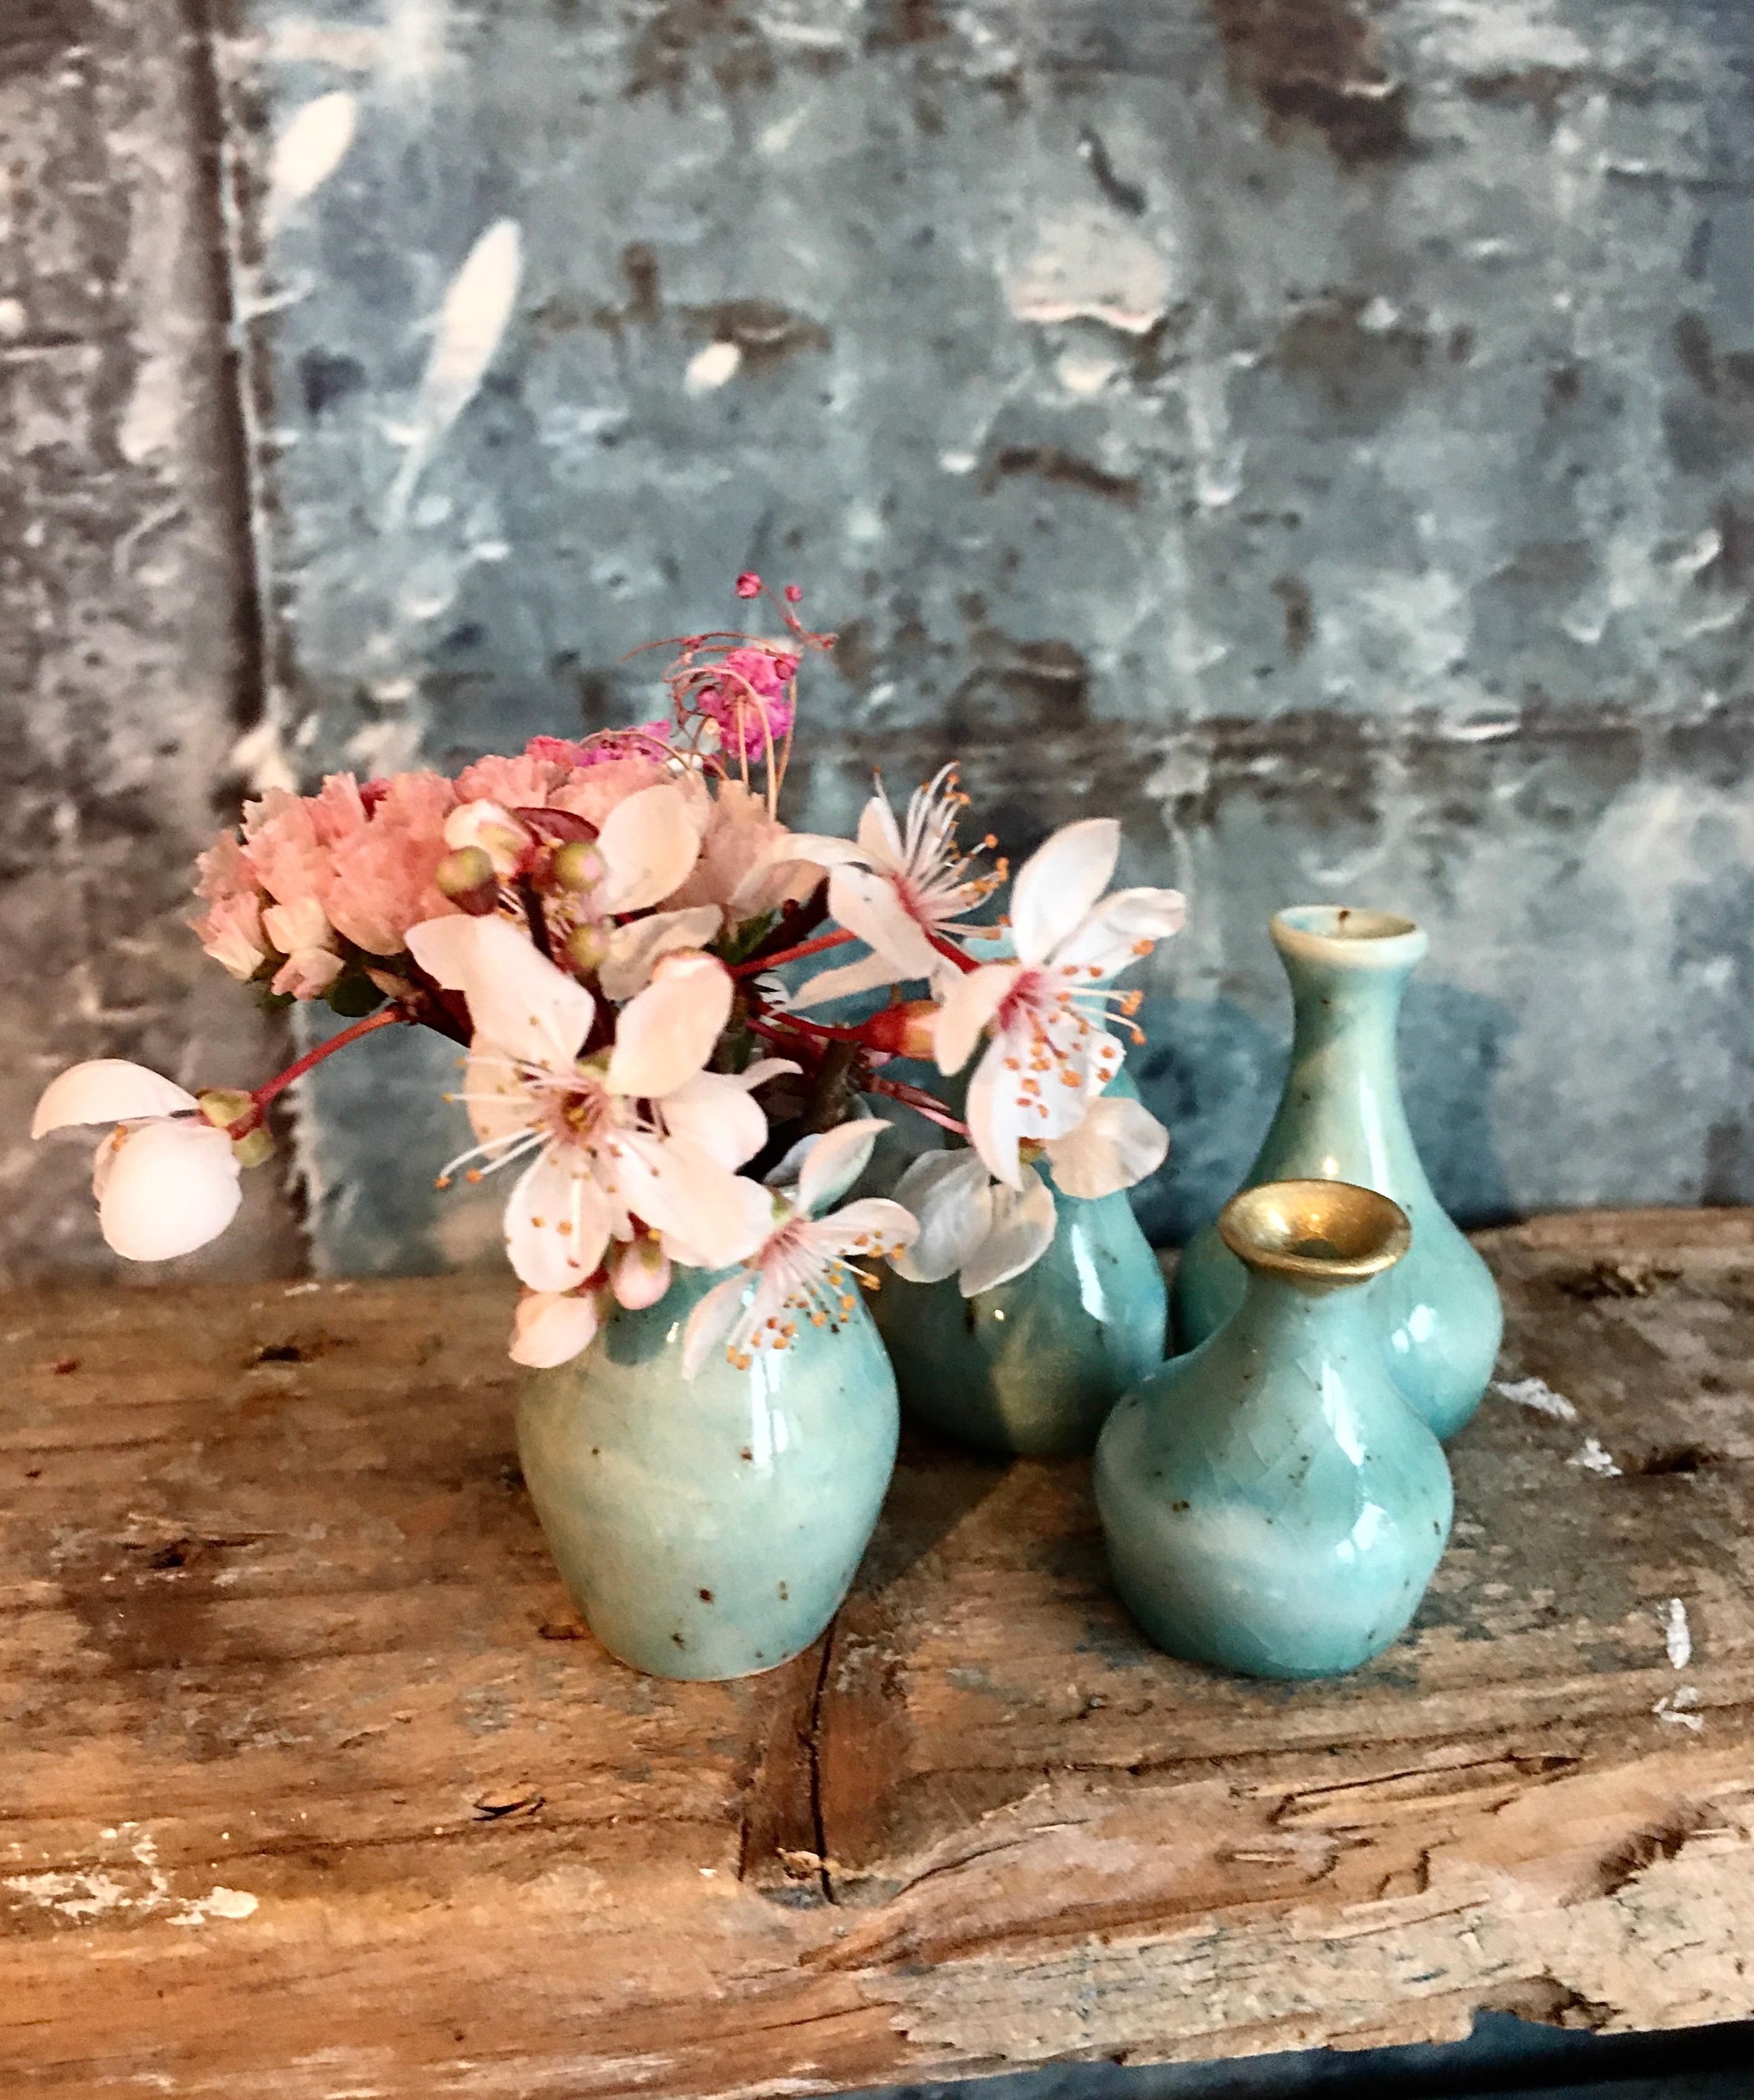 Bald Frühling! erste Blüten vom Pflaumenbaum #frühling #minivasen #rosa #hellblau #keramik #handgetöpfert